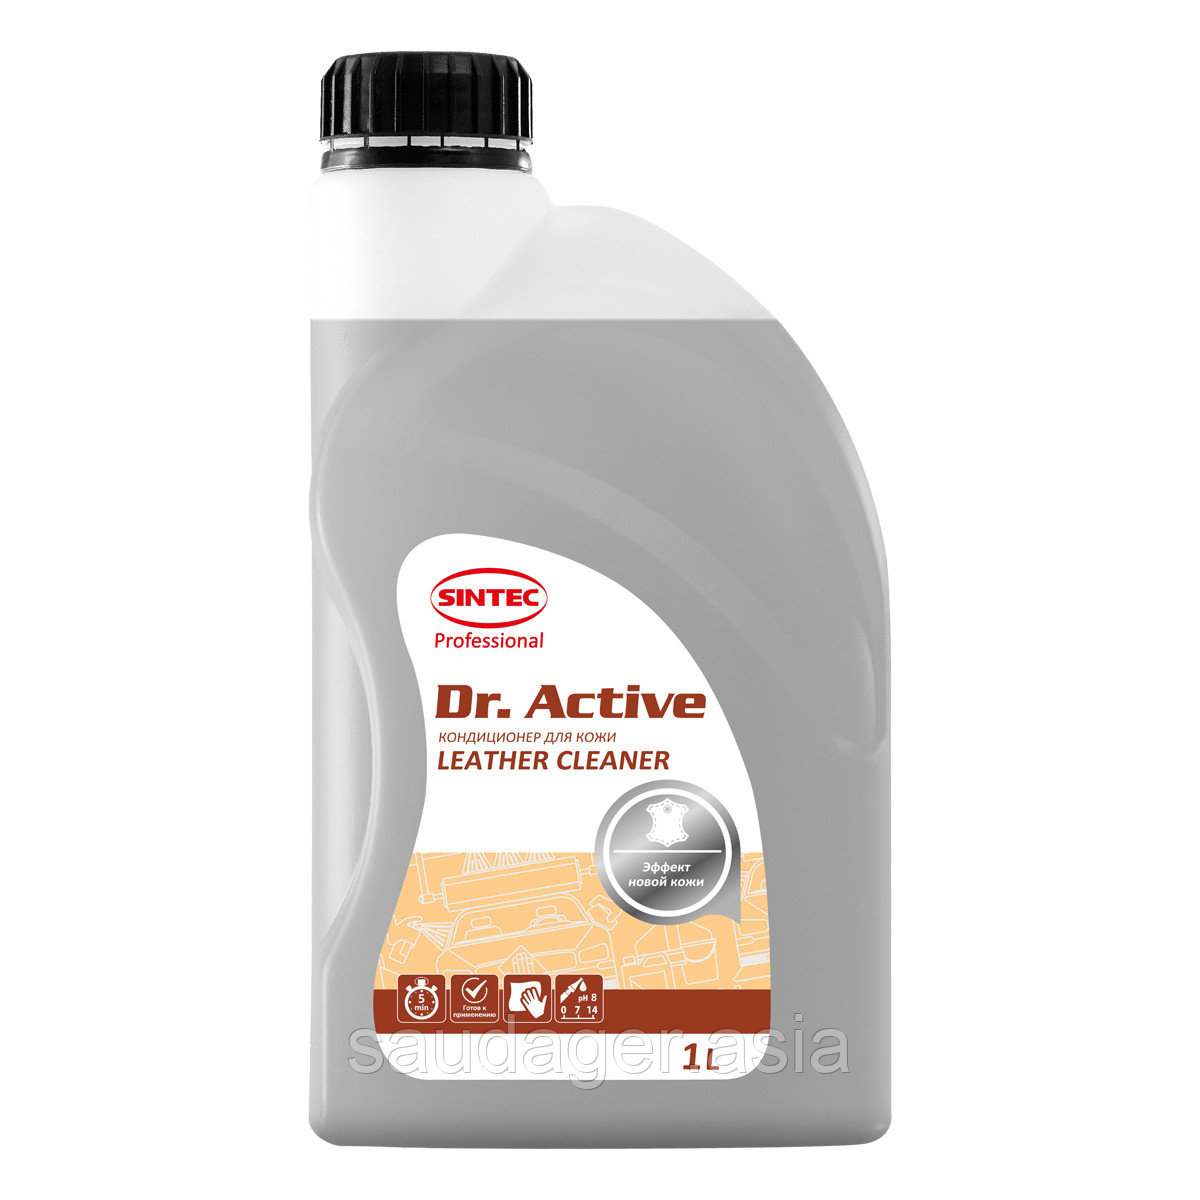 Sintec Dr. Active Кондиционер для кожи "Leather Cleaner" (1 кг)